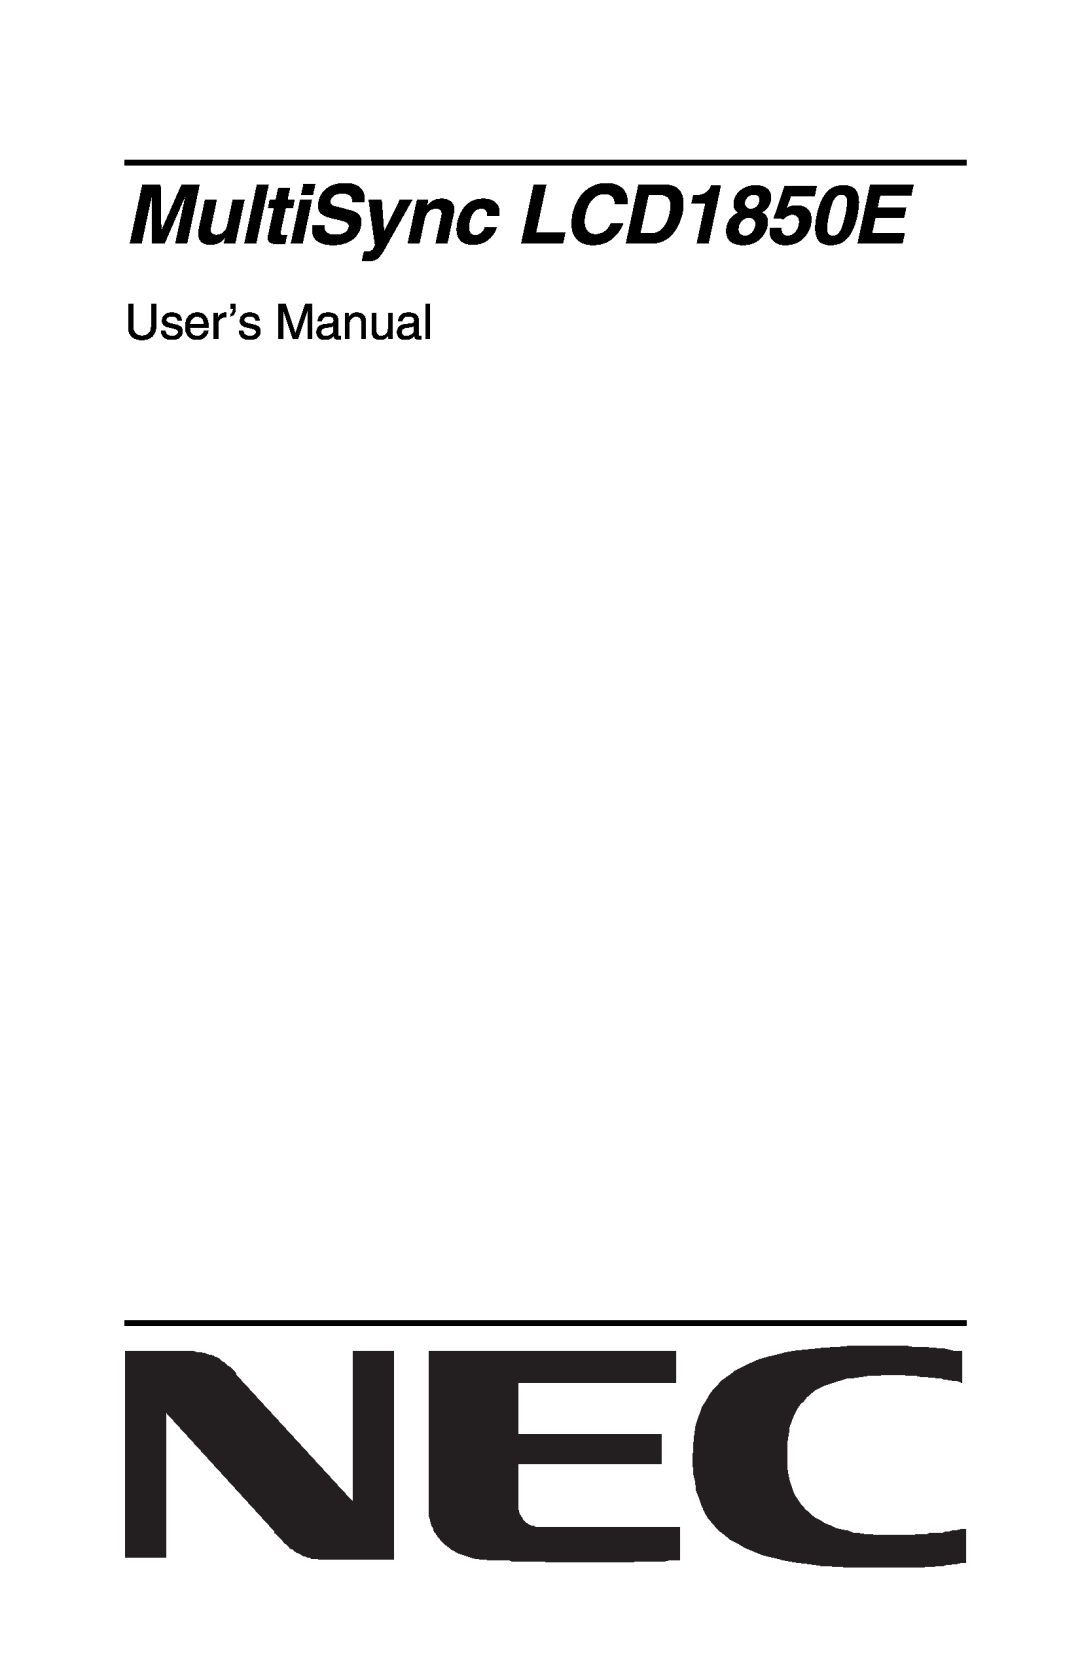 NEC user manual MultiSync LCD1850E, UserÕs Manual 